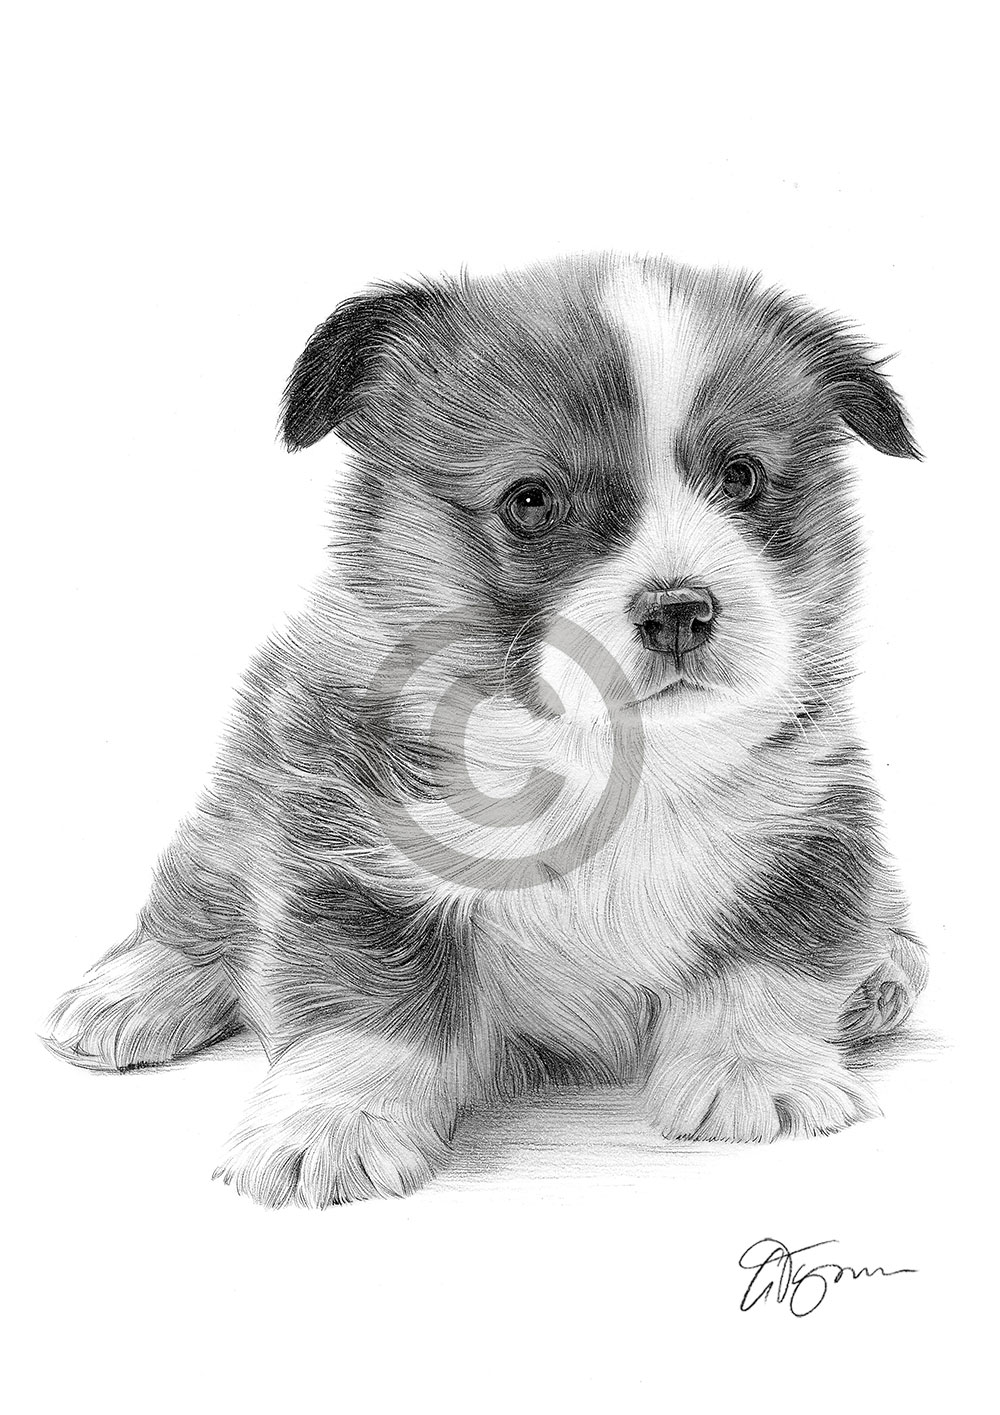 Pencil drawing of a Pembrokeshire Corgi puppy by artist Gary Tymon